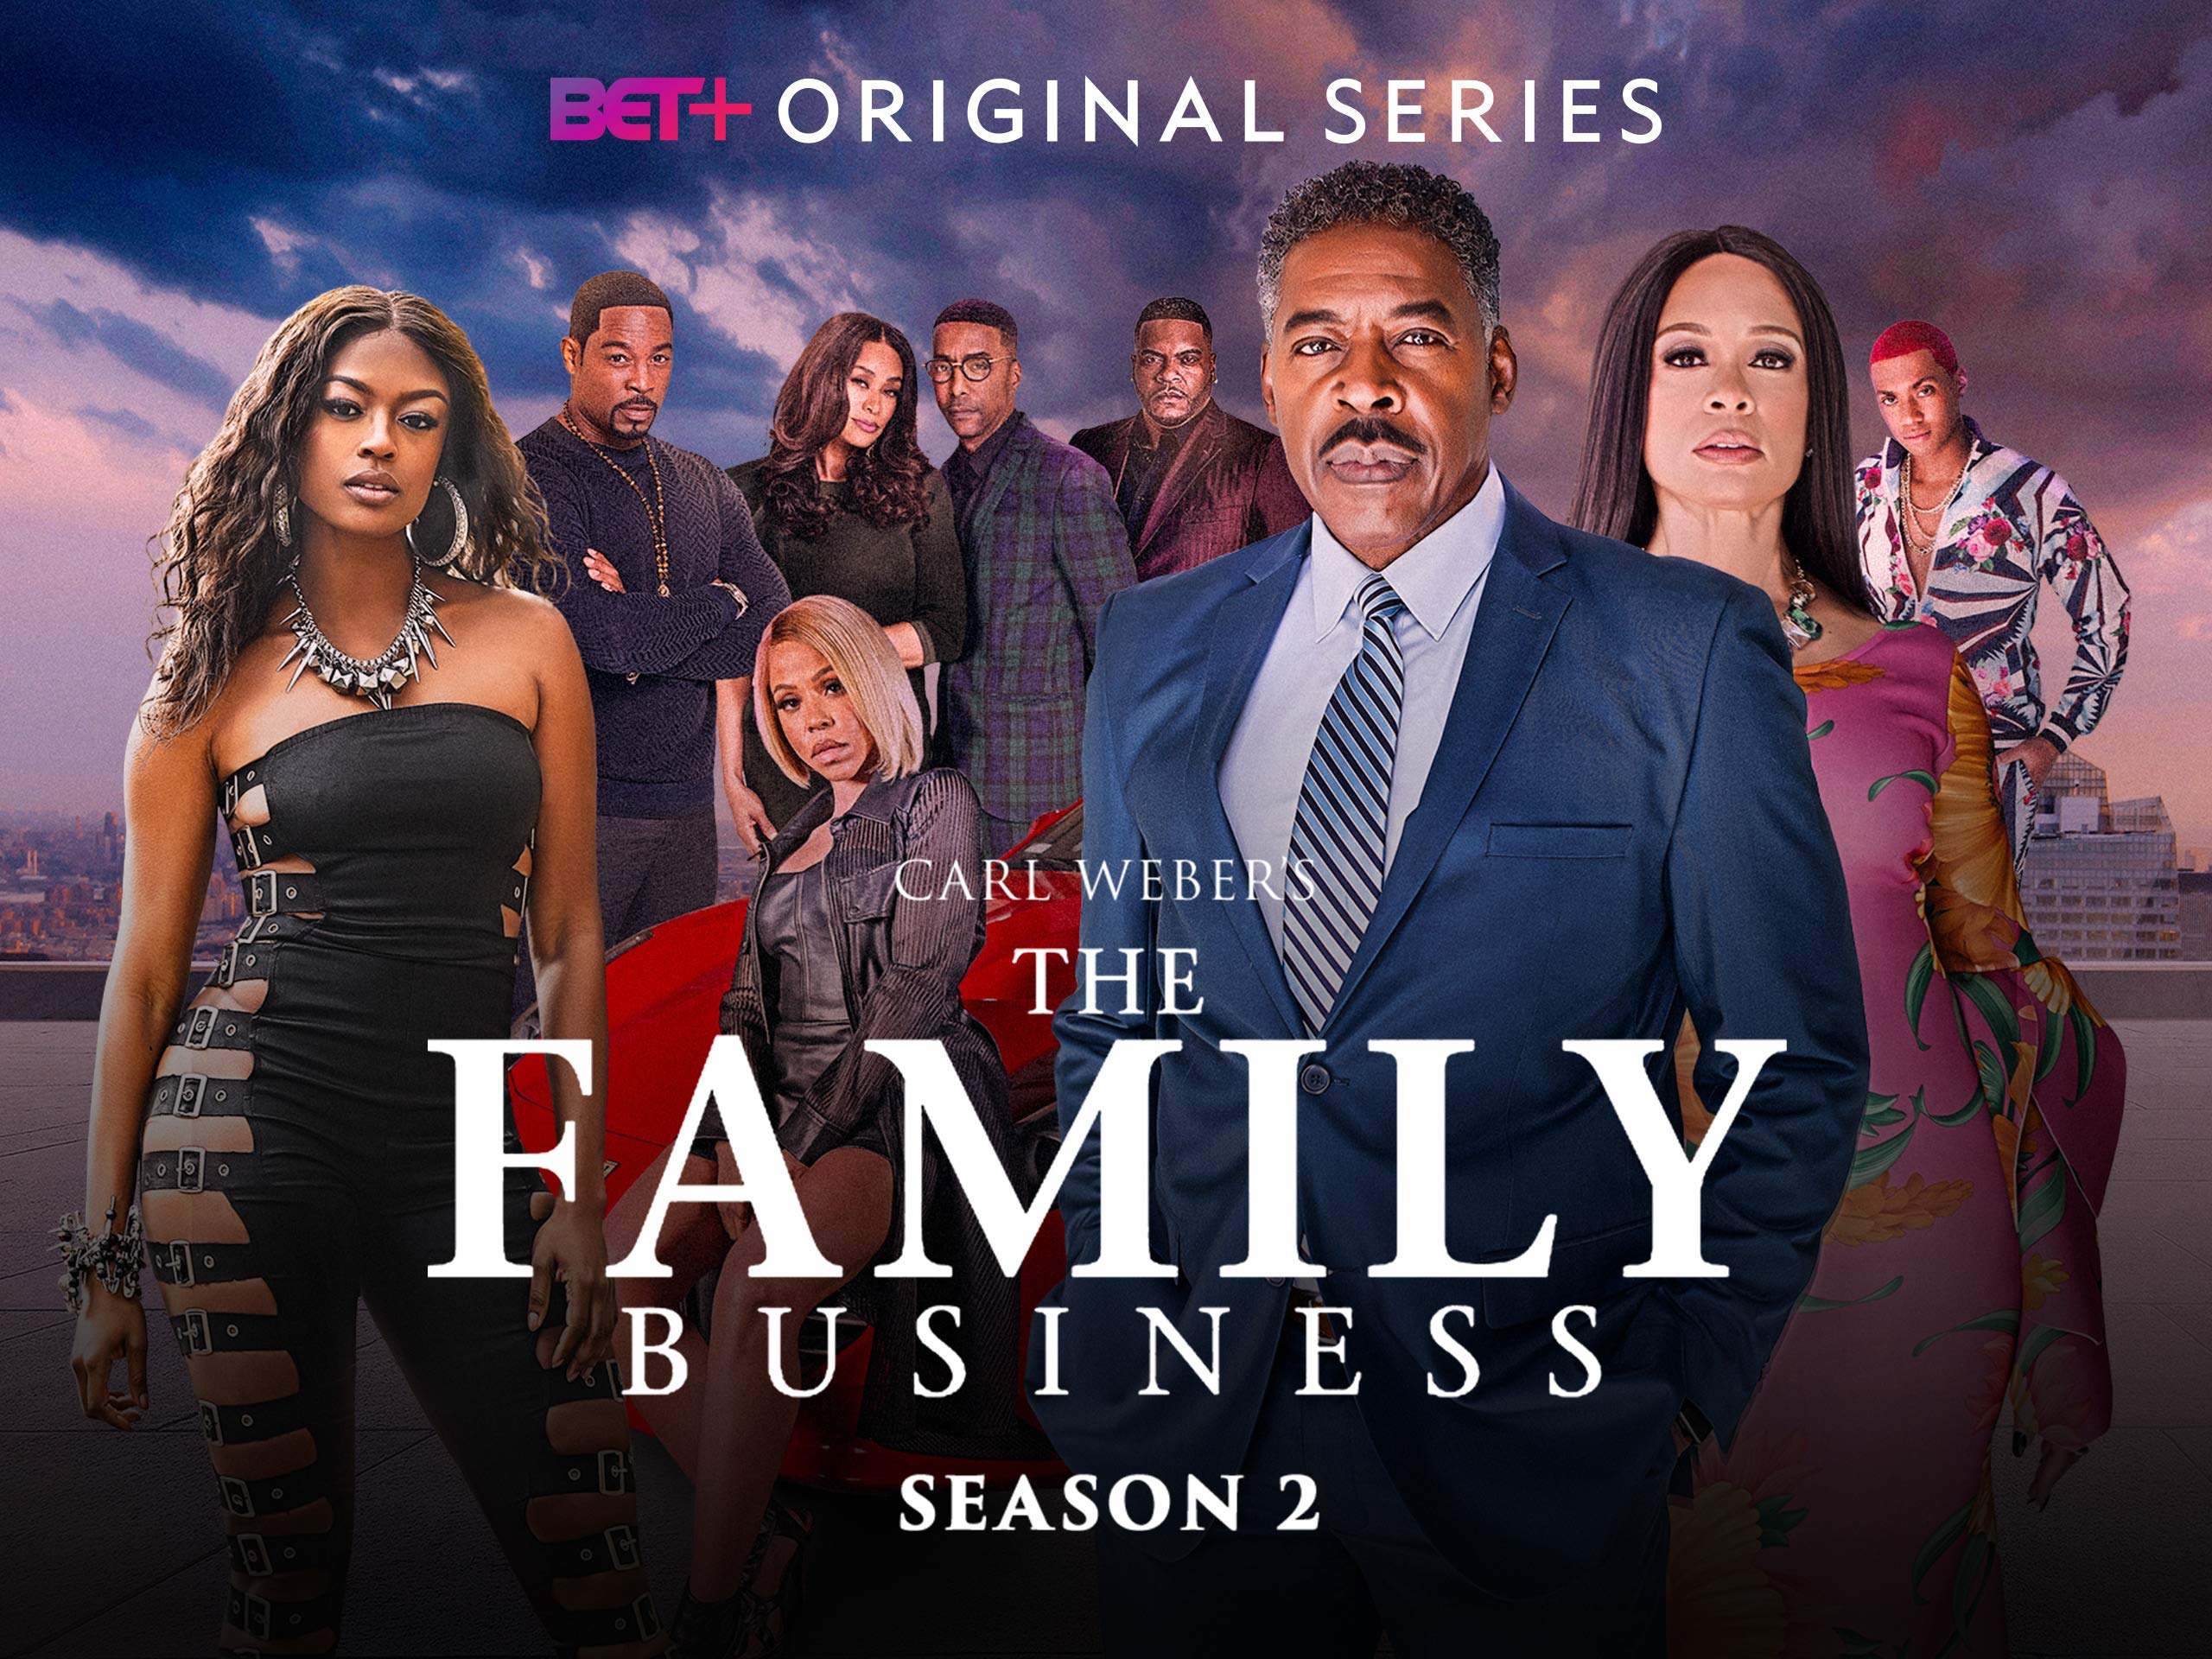 Family Business Season 1 (2019)